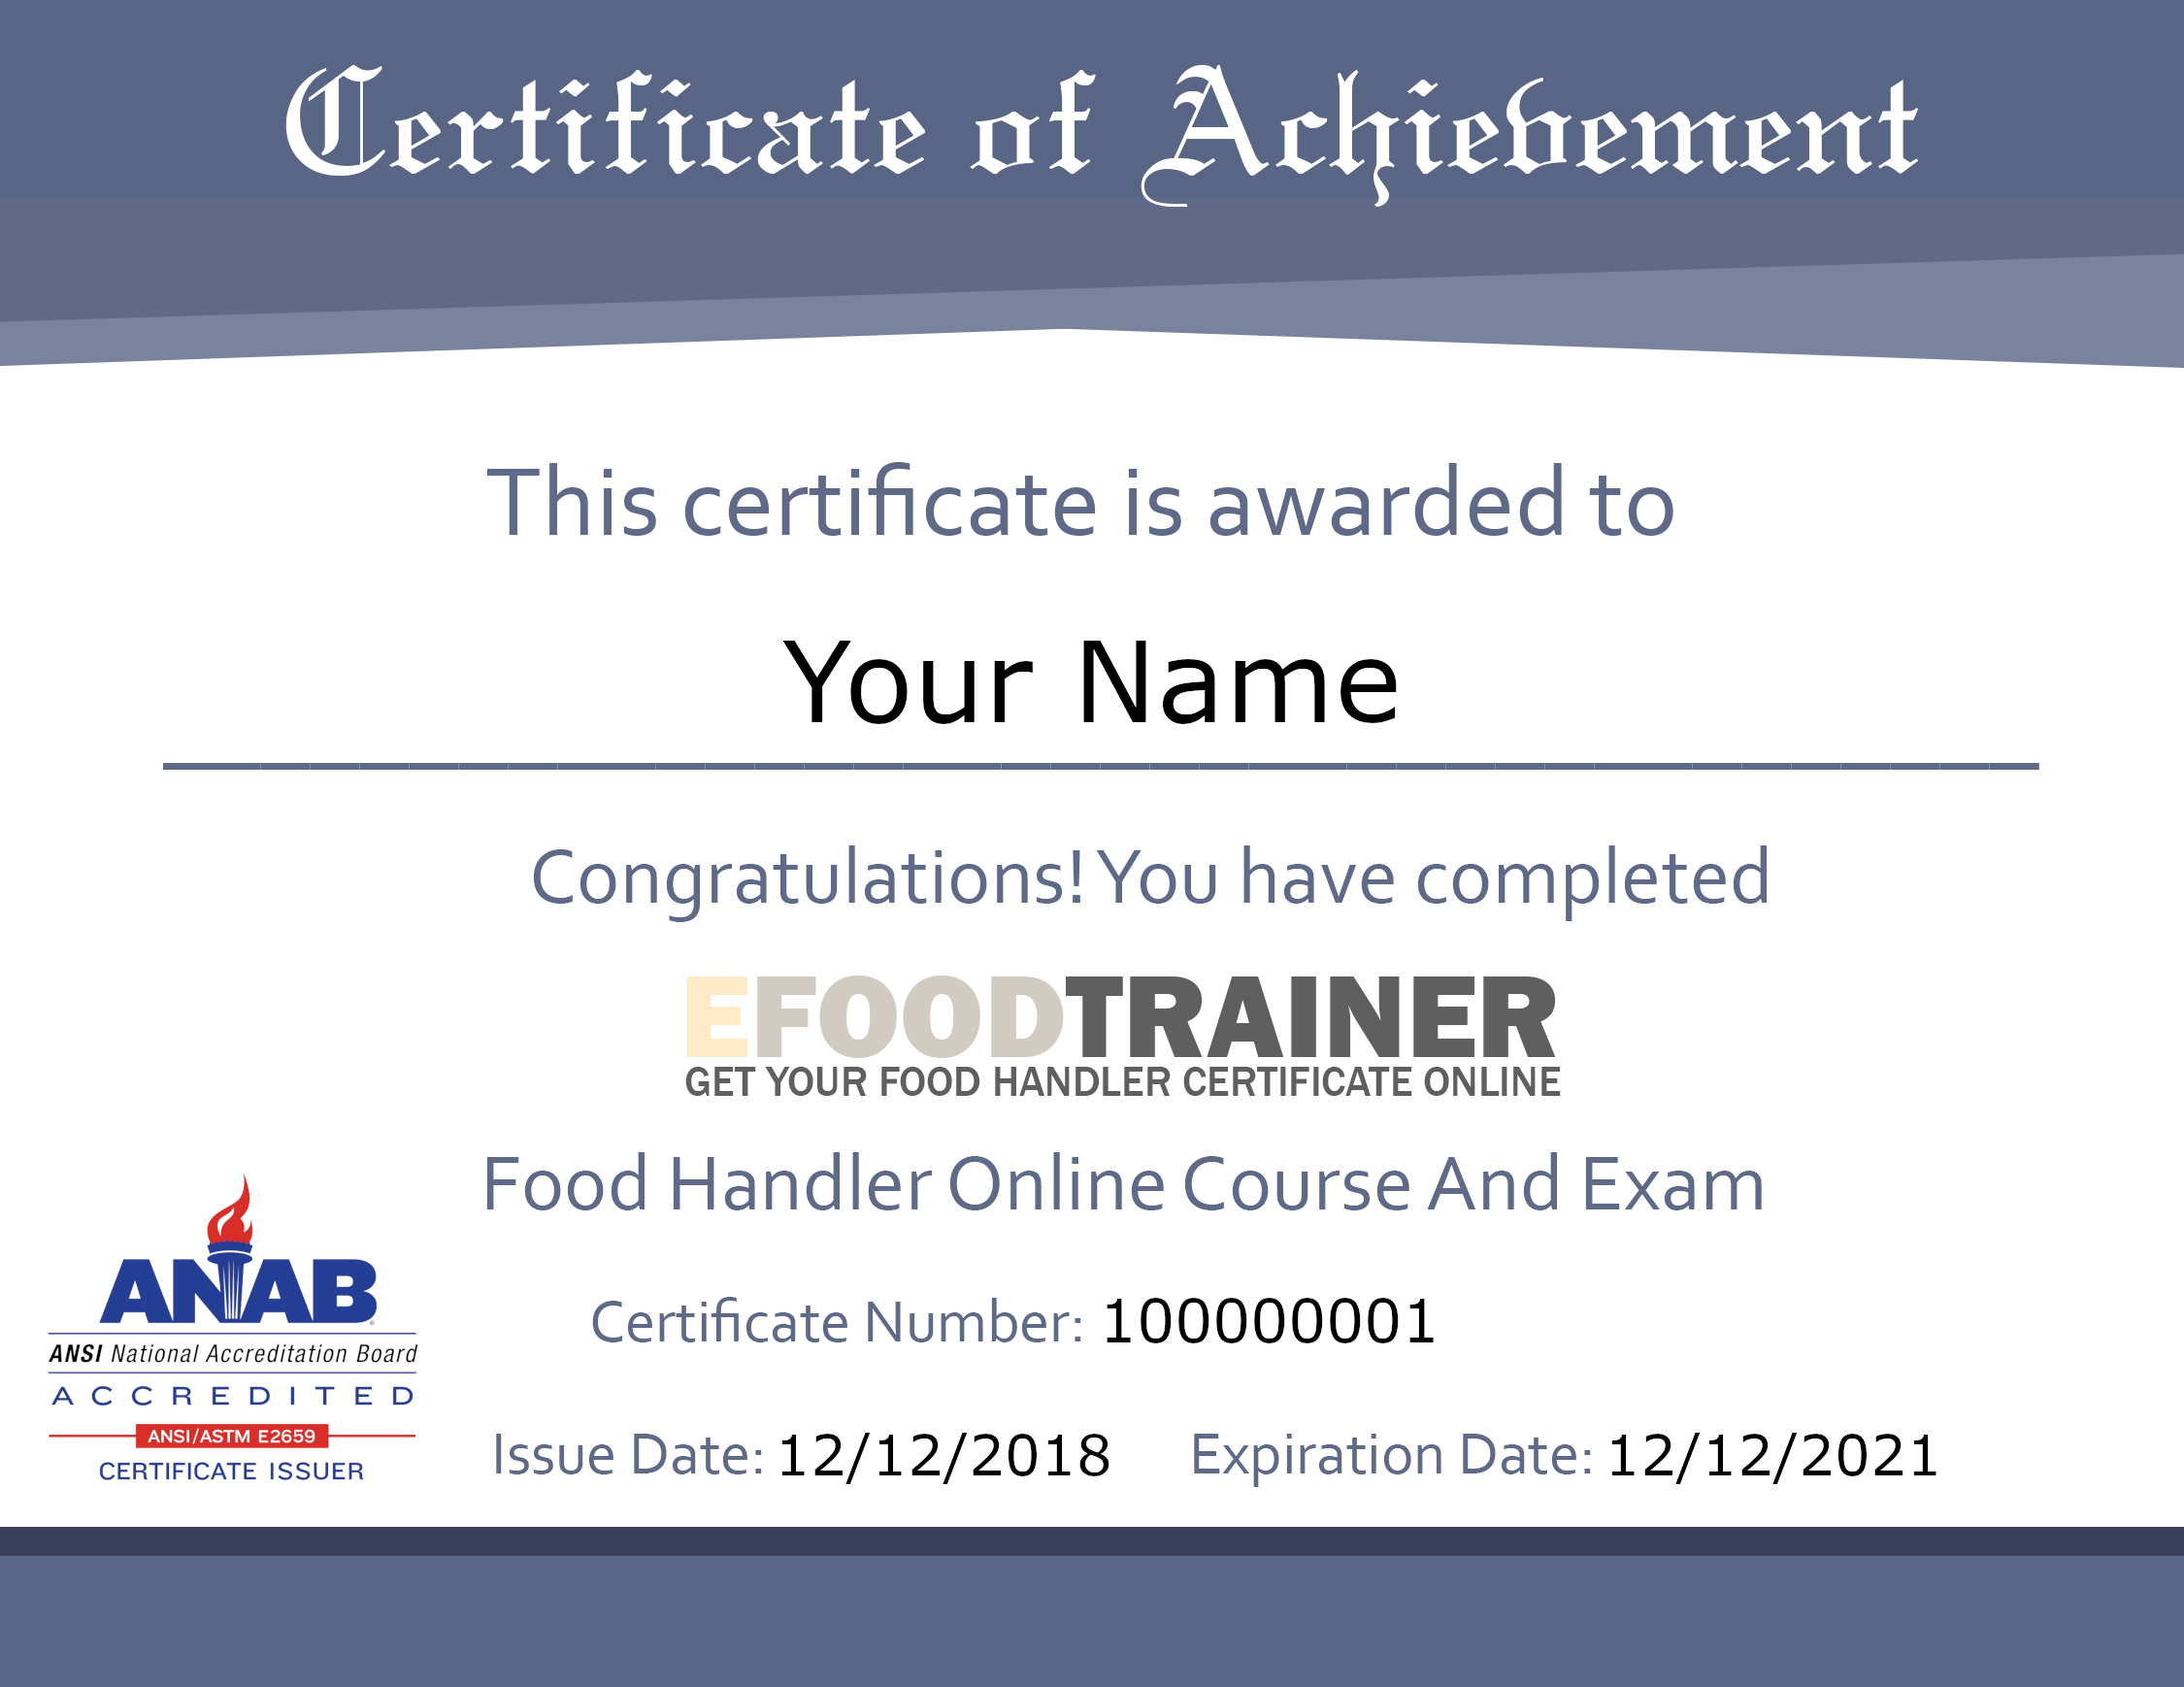 Food Handeling Certificate Master of Documents